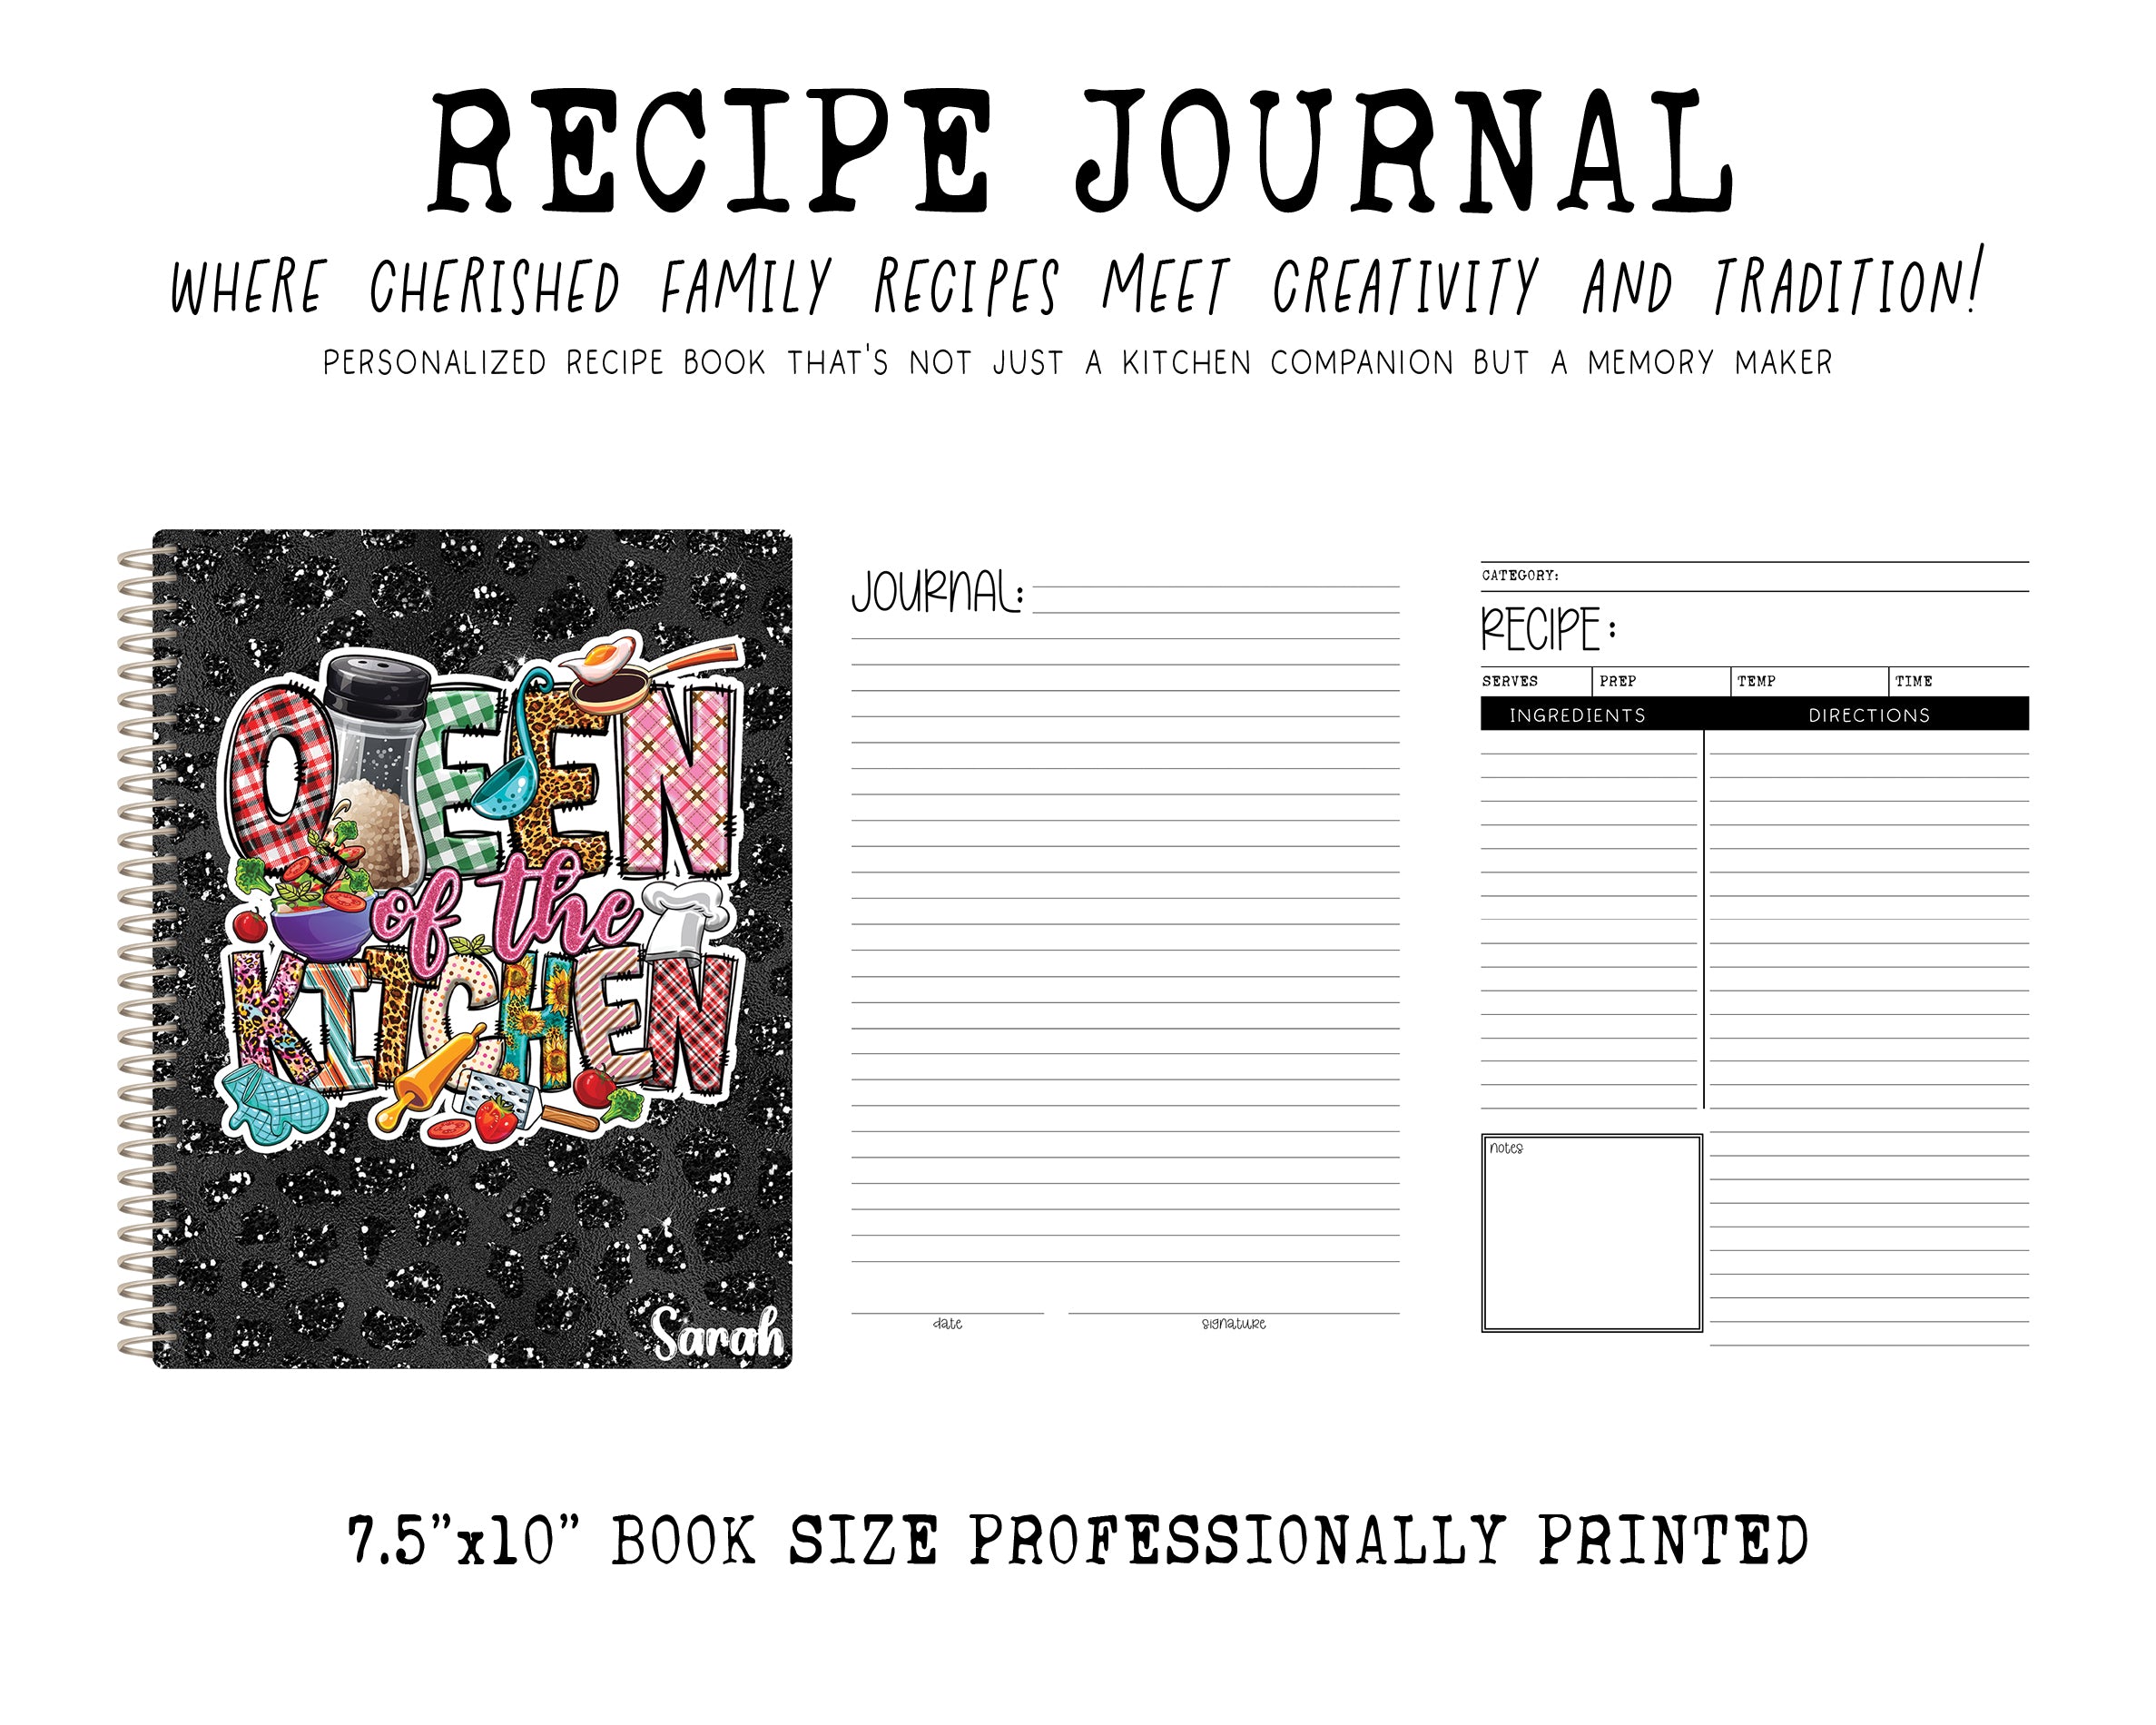 Recipe Journal | QUEEN OF THE KITCHEN